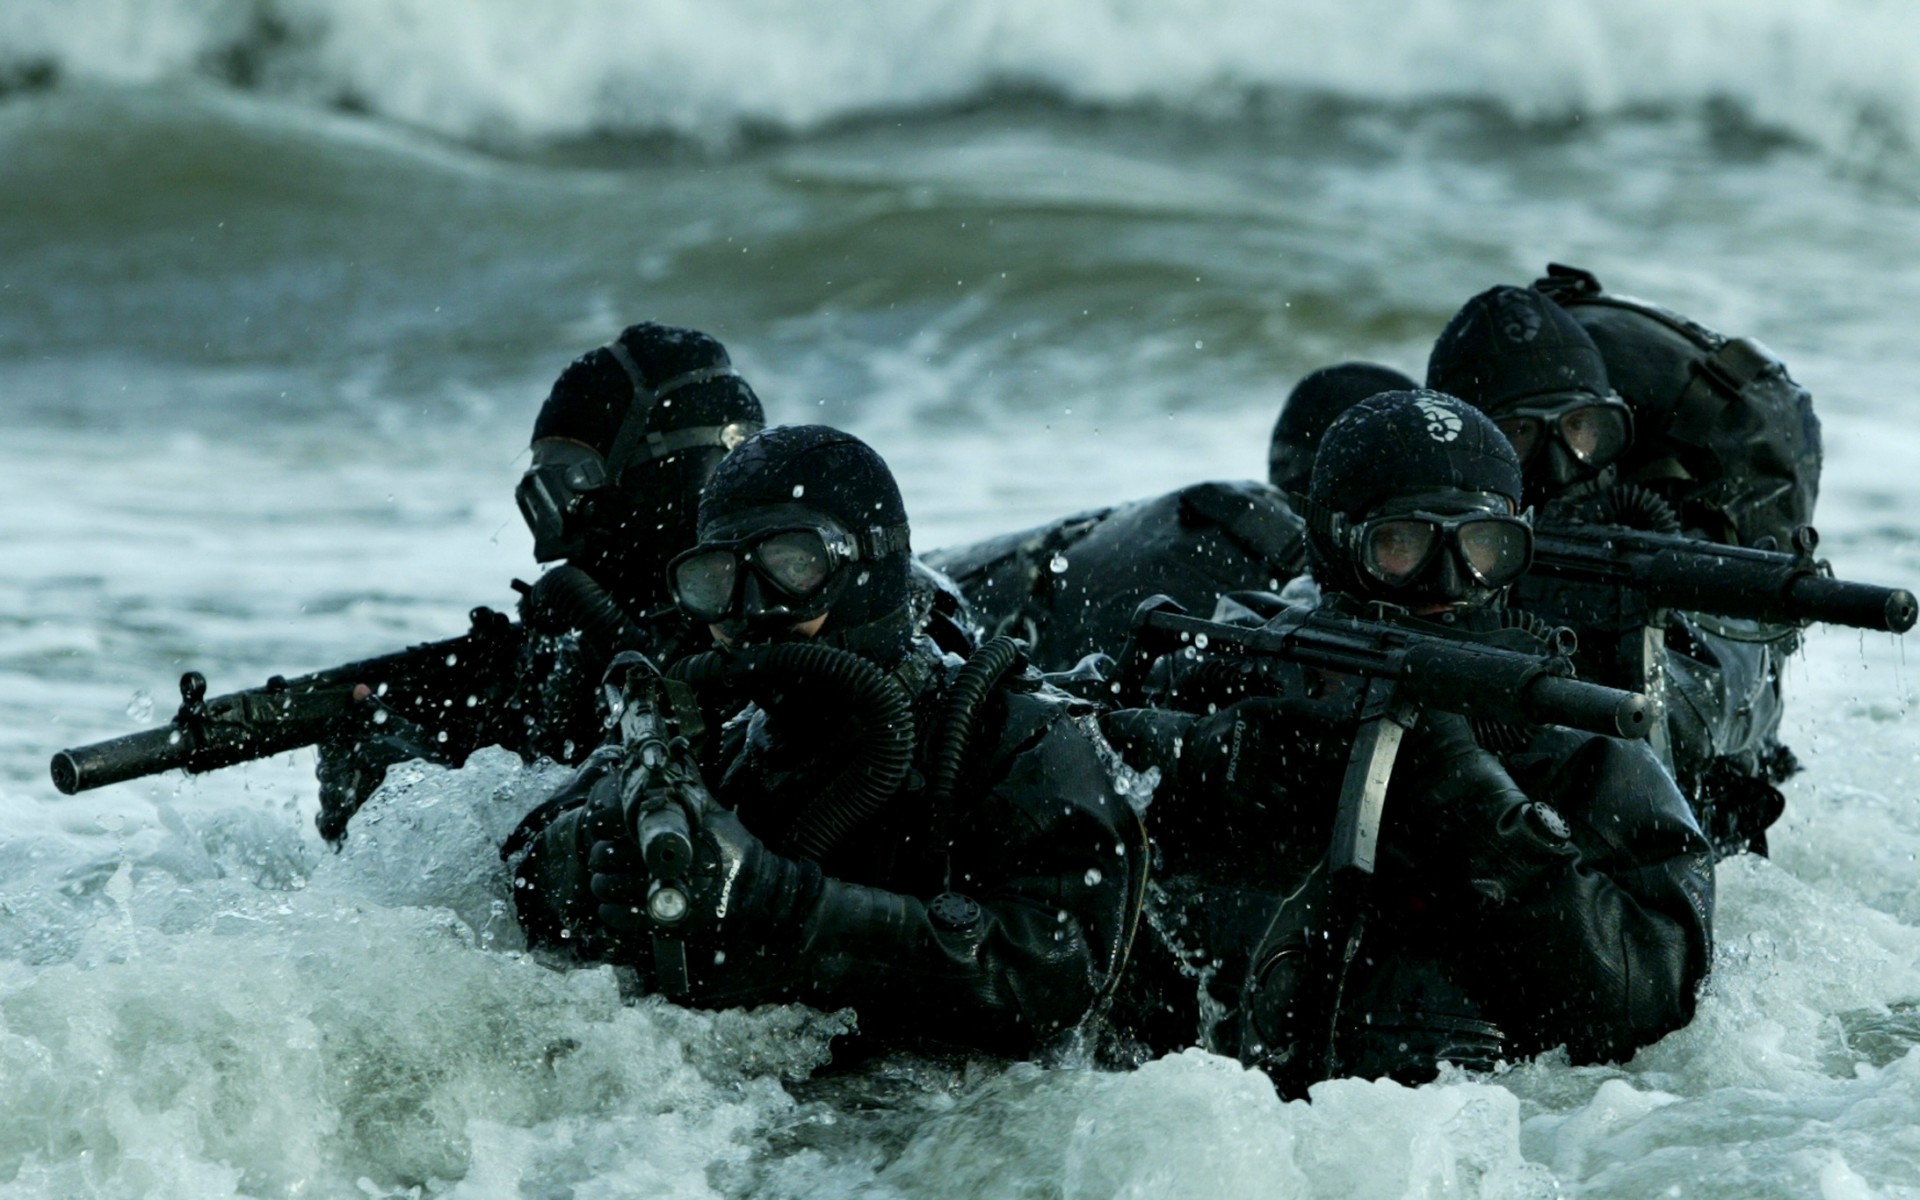 Best 25 Navy seal wallpaper ideas on Pinterest Seal team 6, Us navy seals training and Navy seal training